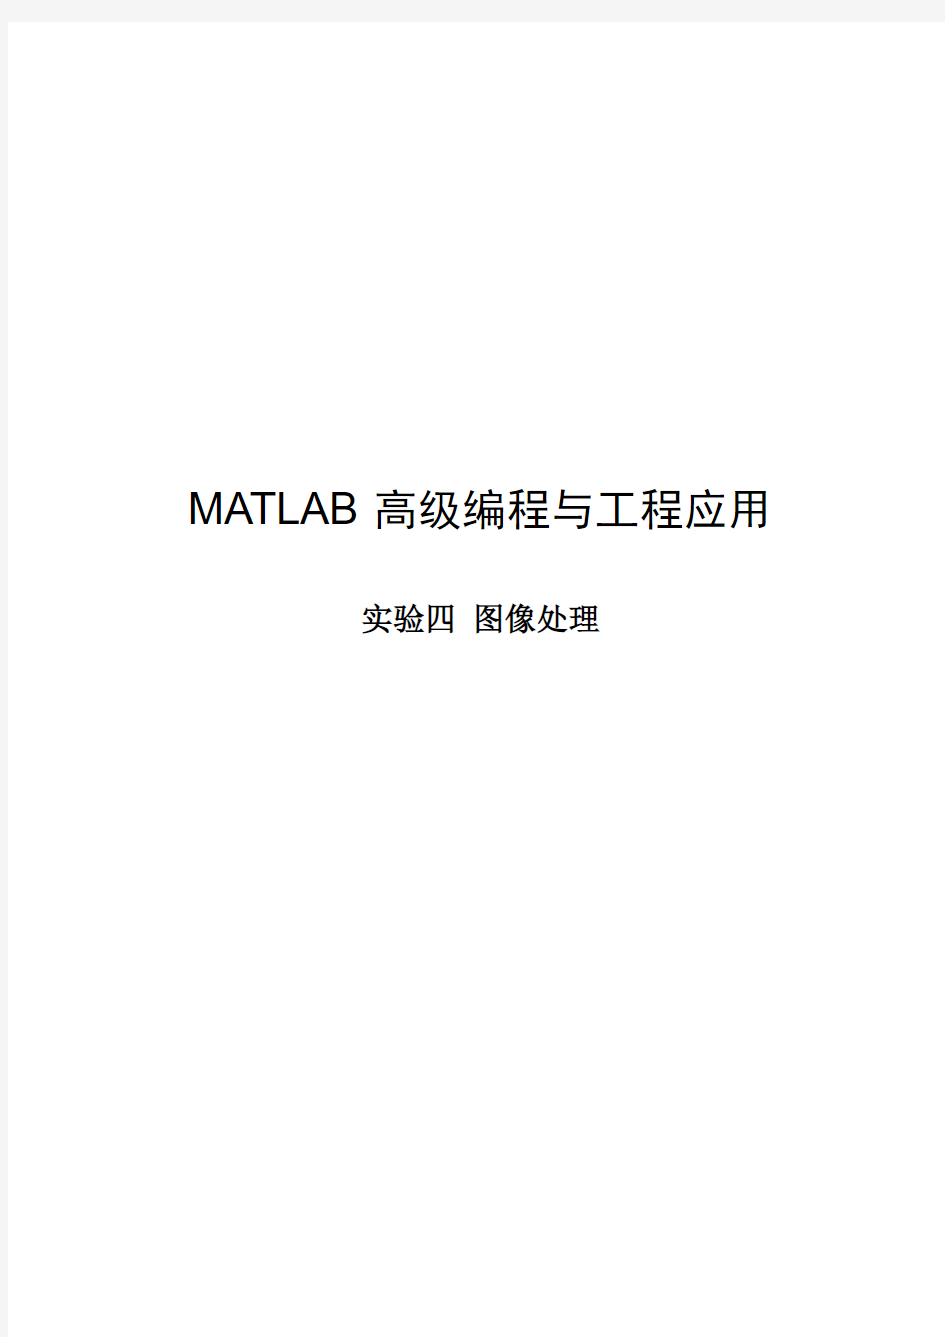 MATLAB 高级编程与工程应用 人脸识别 实验报告+源代码